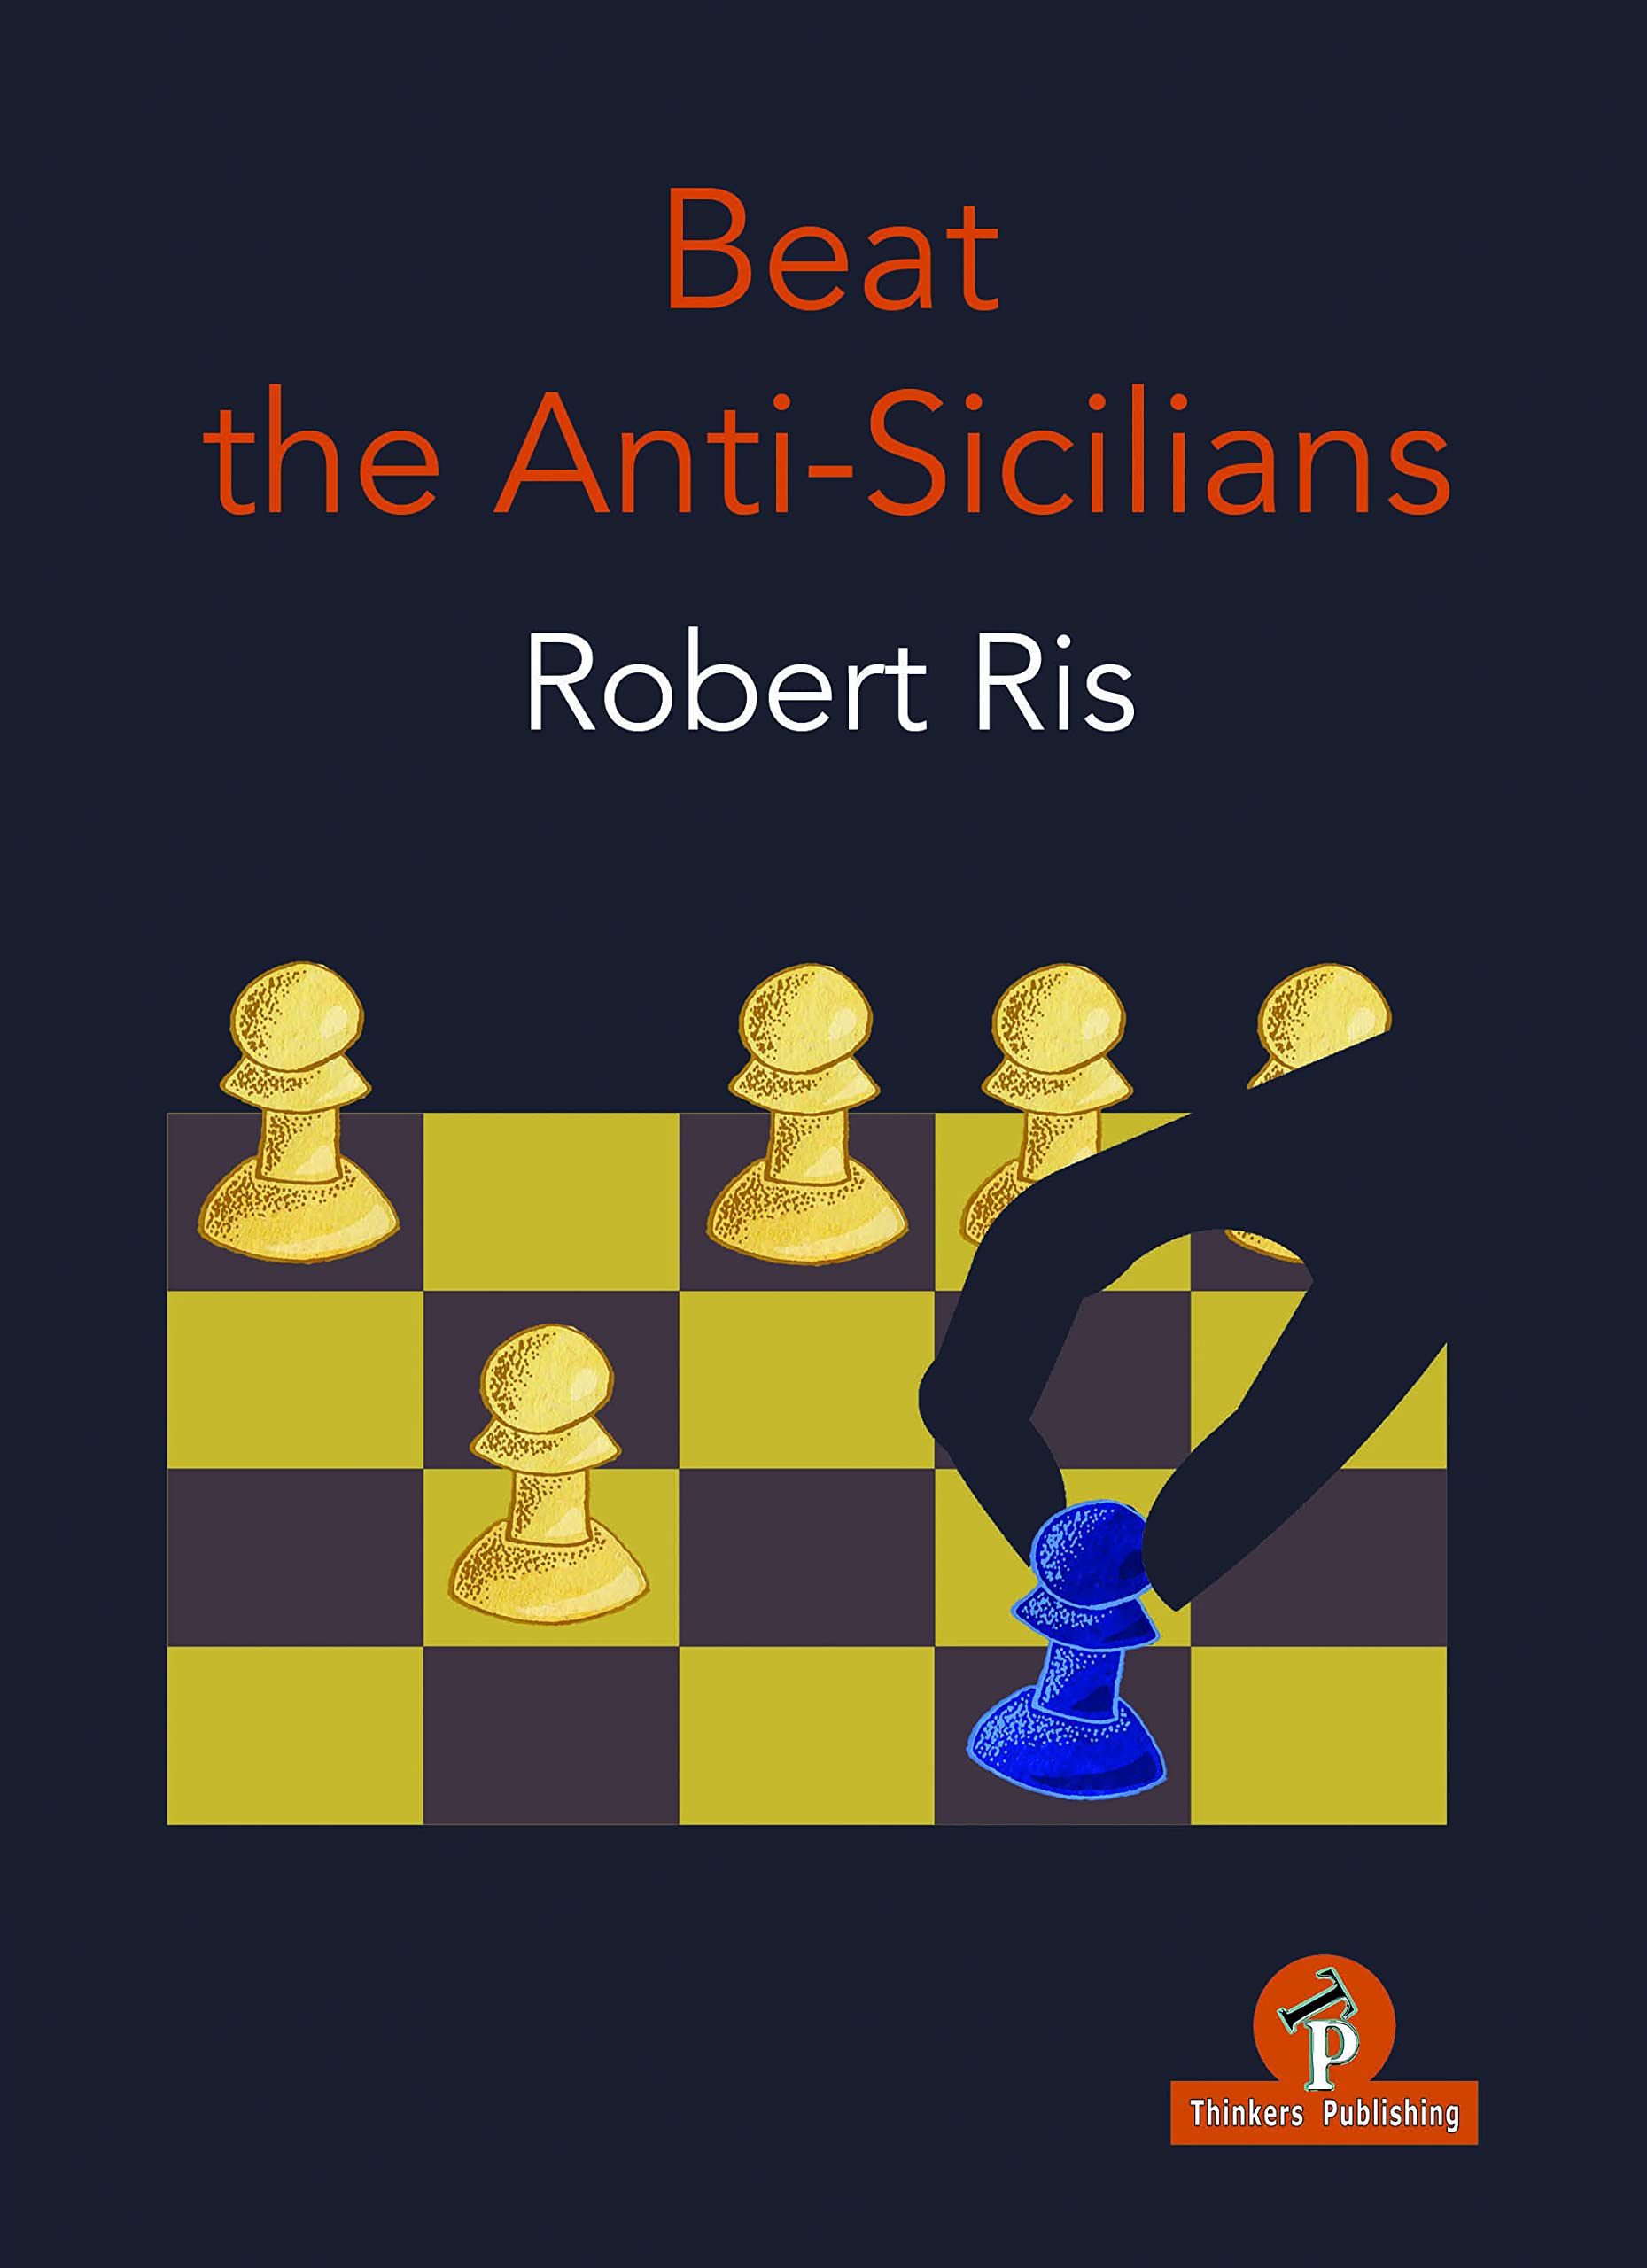 Beat the Anti-Sicilians, Robert Ris, Thinker's Publishing, 11th Jan 2022, ISBN-13 ‏ : ‎ 978-9464201369